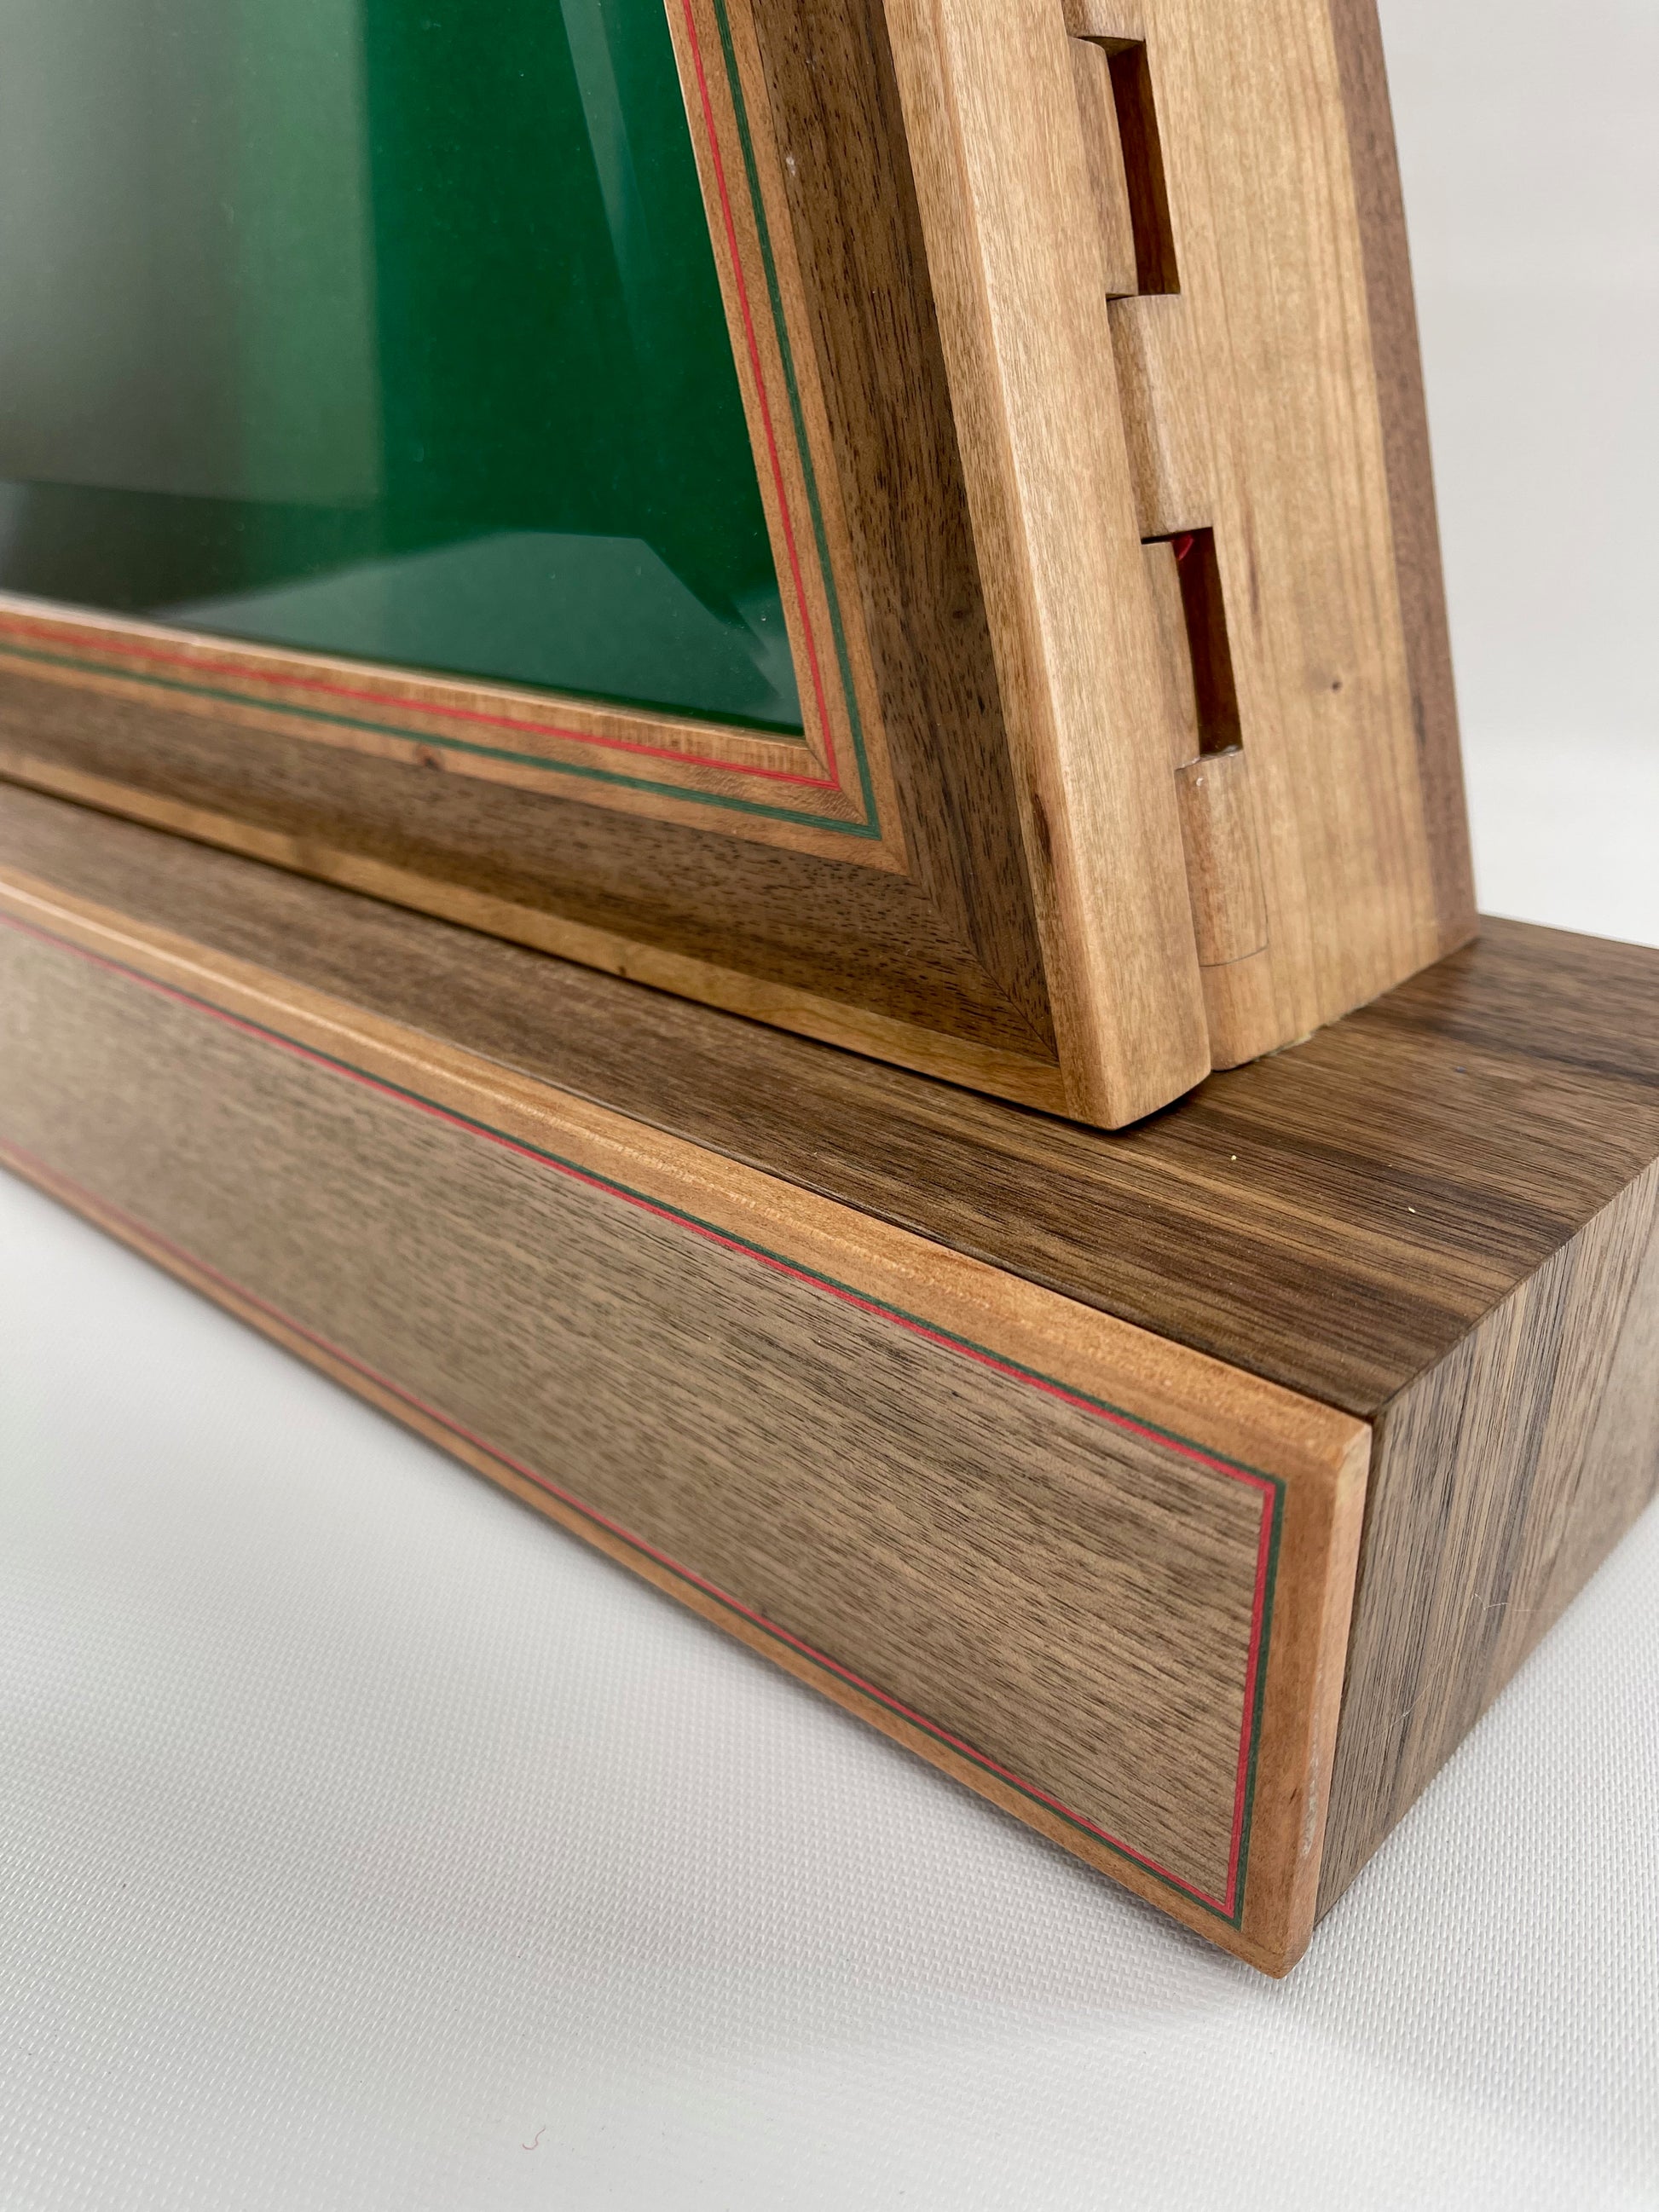 Wooden Triangle Display Cabinet - TreeToBox